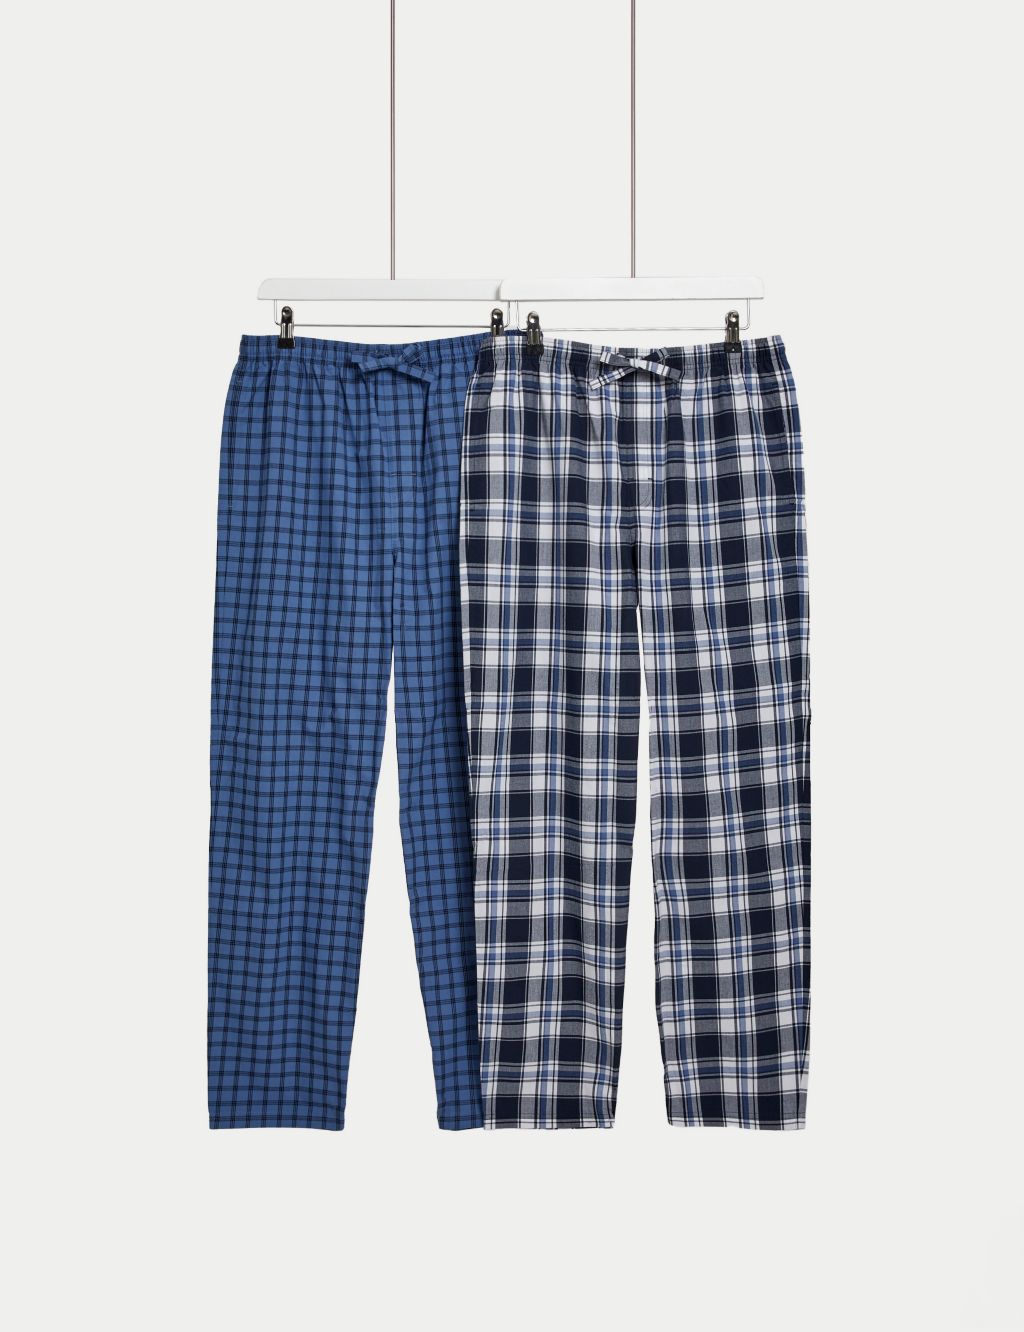 Plaid Pajama Pants Cotton Jersey - Just Love Fashion